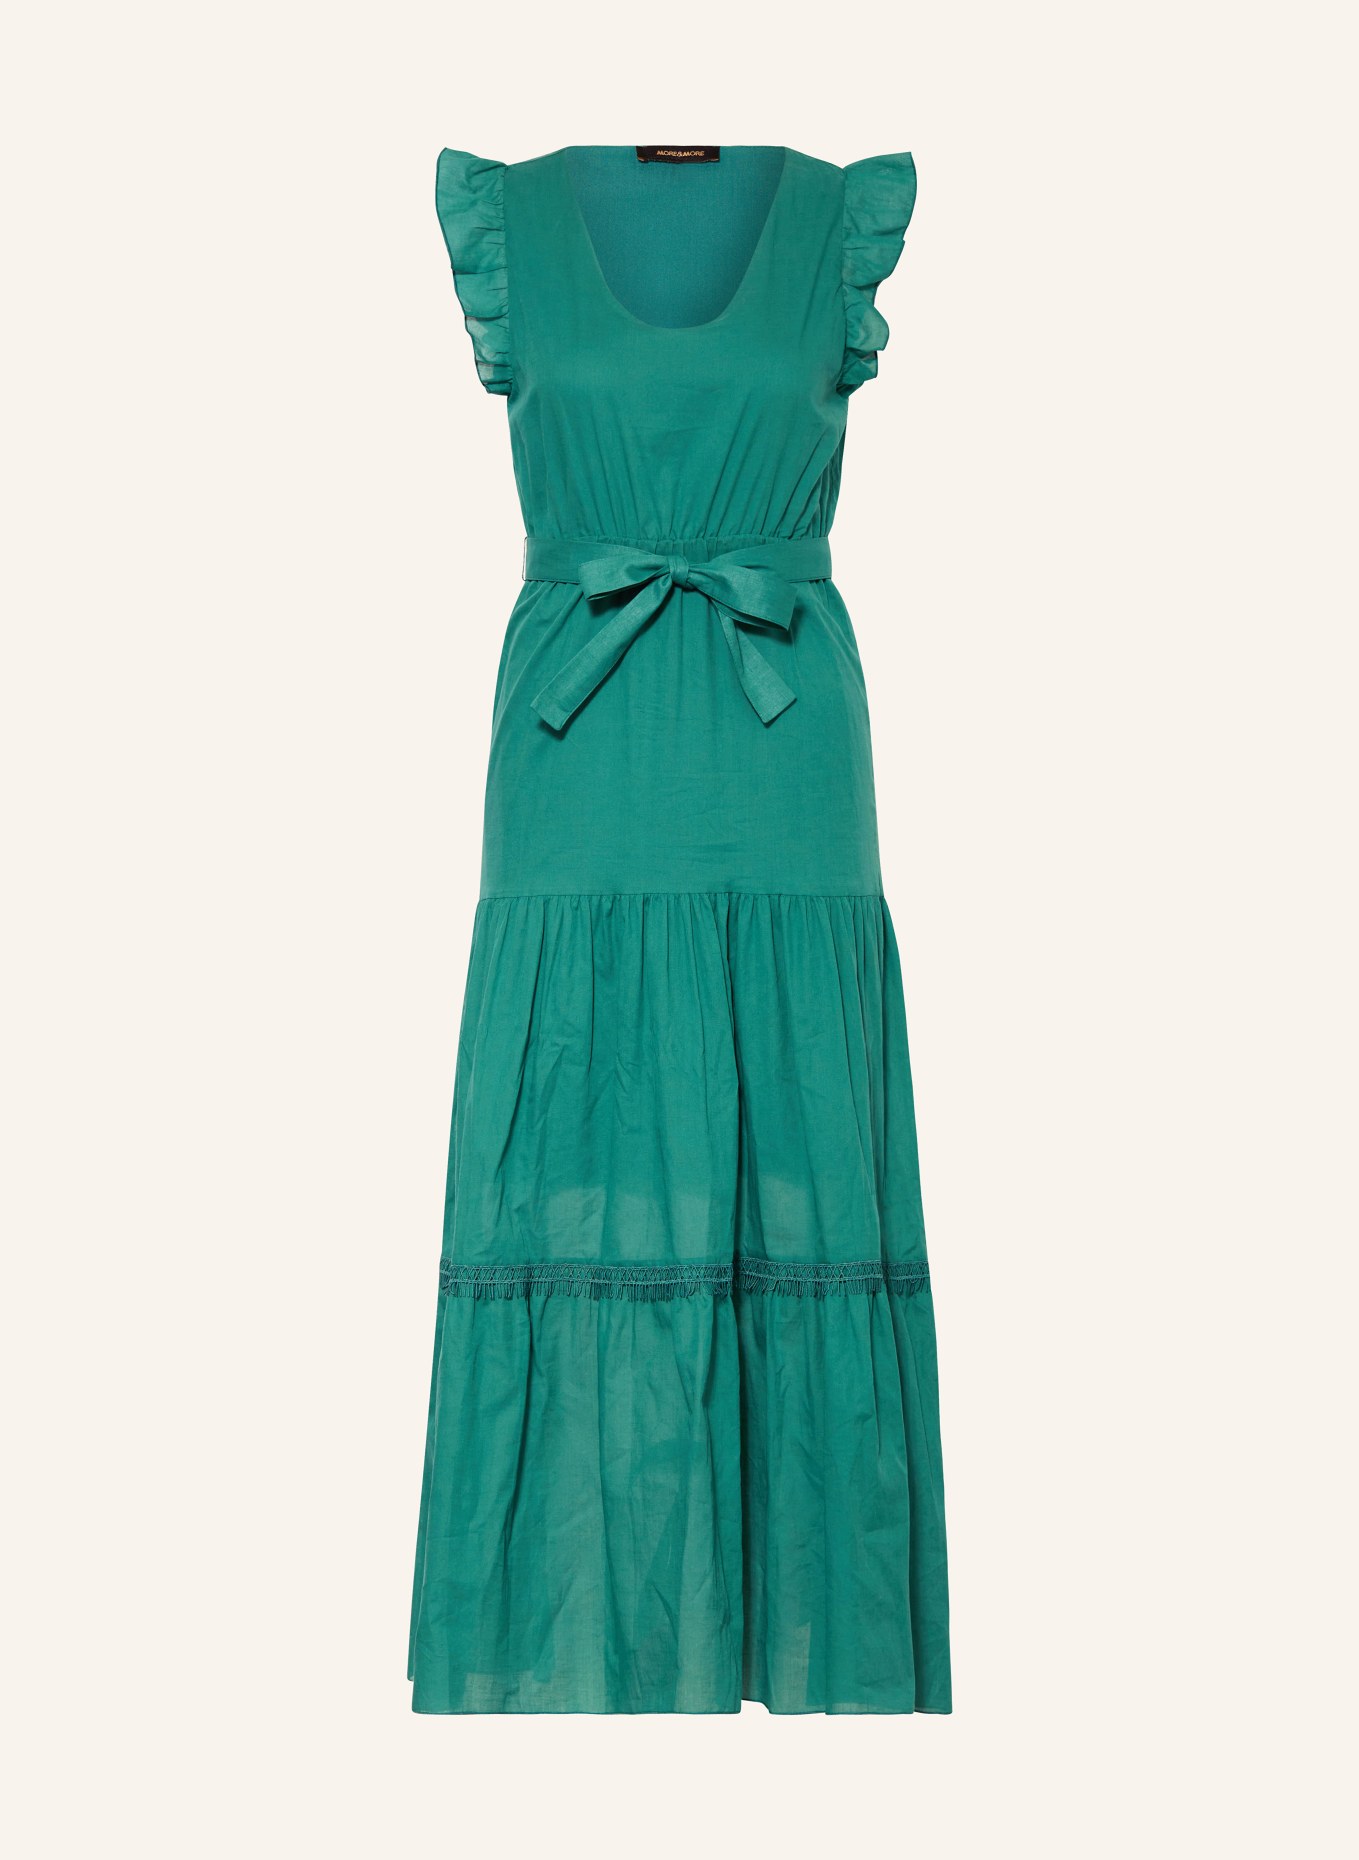 MORE & MORE Kleid, Farbe: GRÜN (Bild 1)